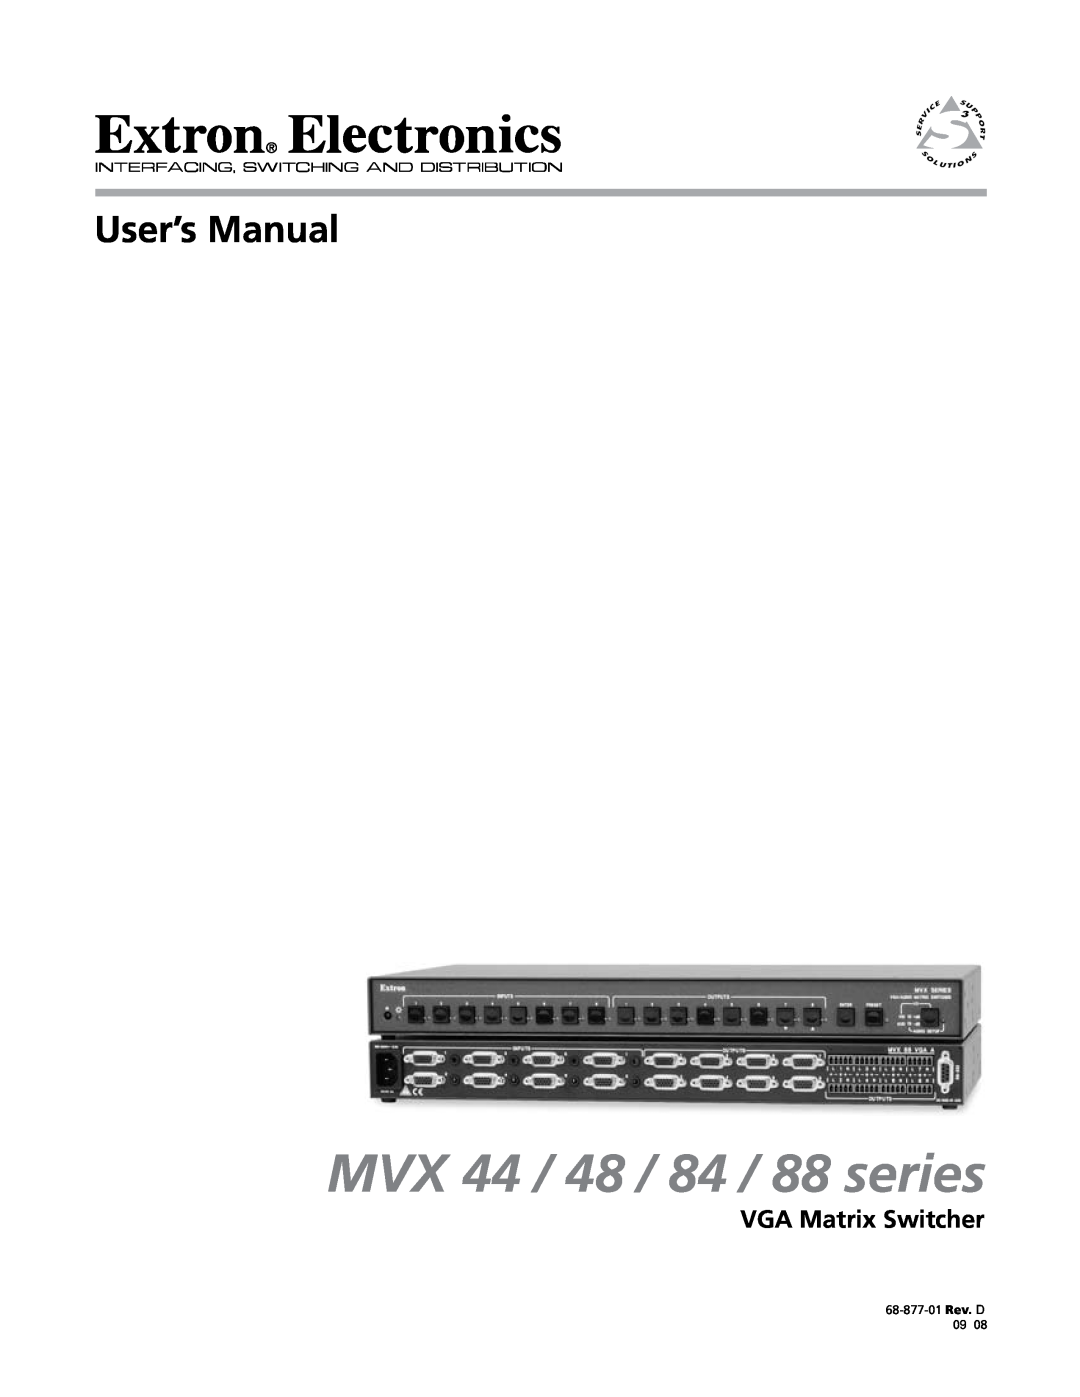 Extron electronic MVX 88 Series manual VGA Matrix Switcher, MVX 44 / 48 / 84 / 88 series, 68-877-01 Rev. D 